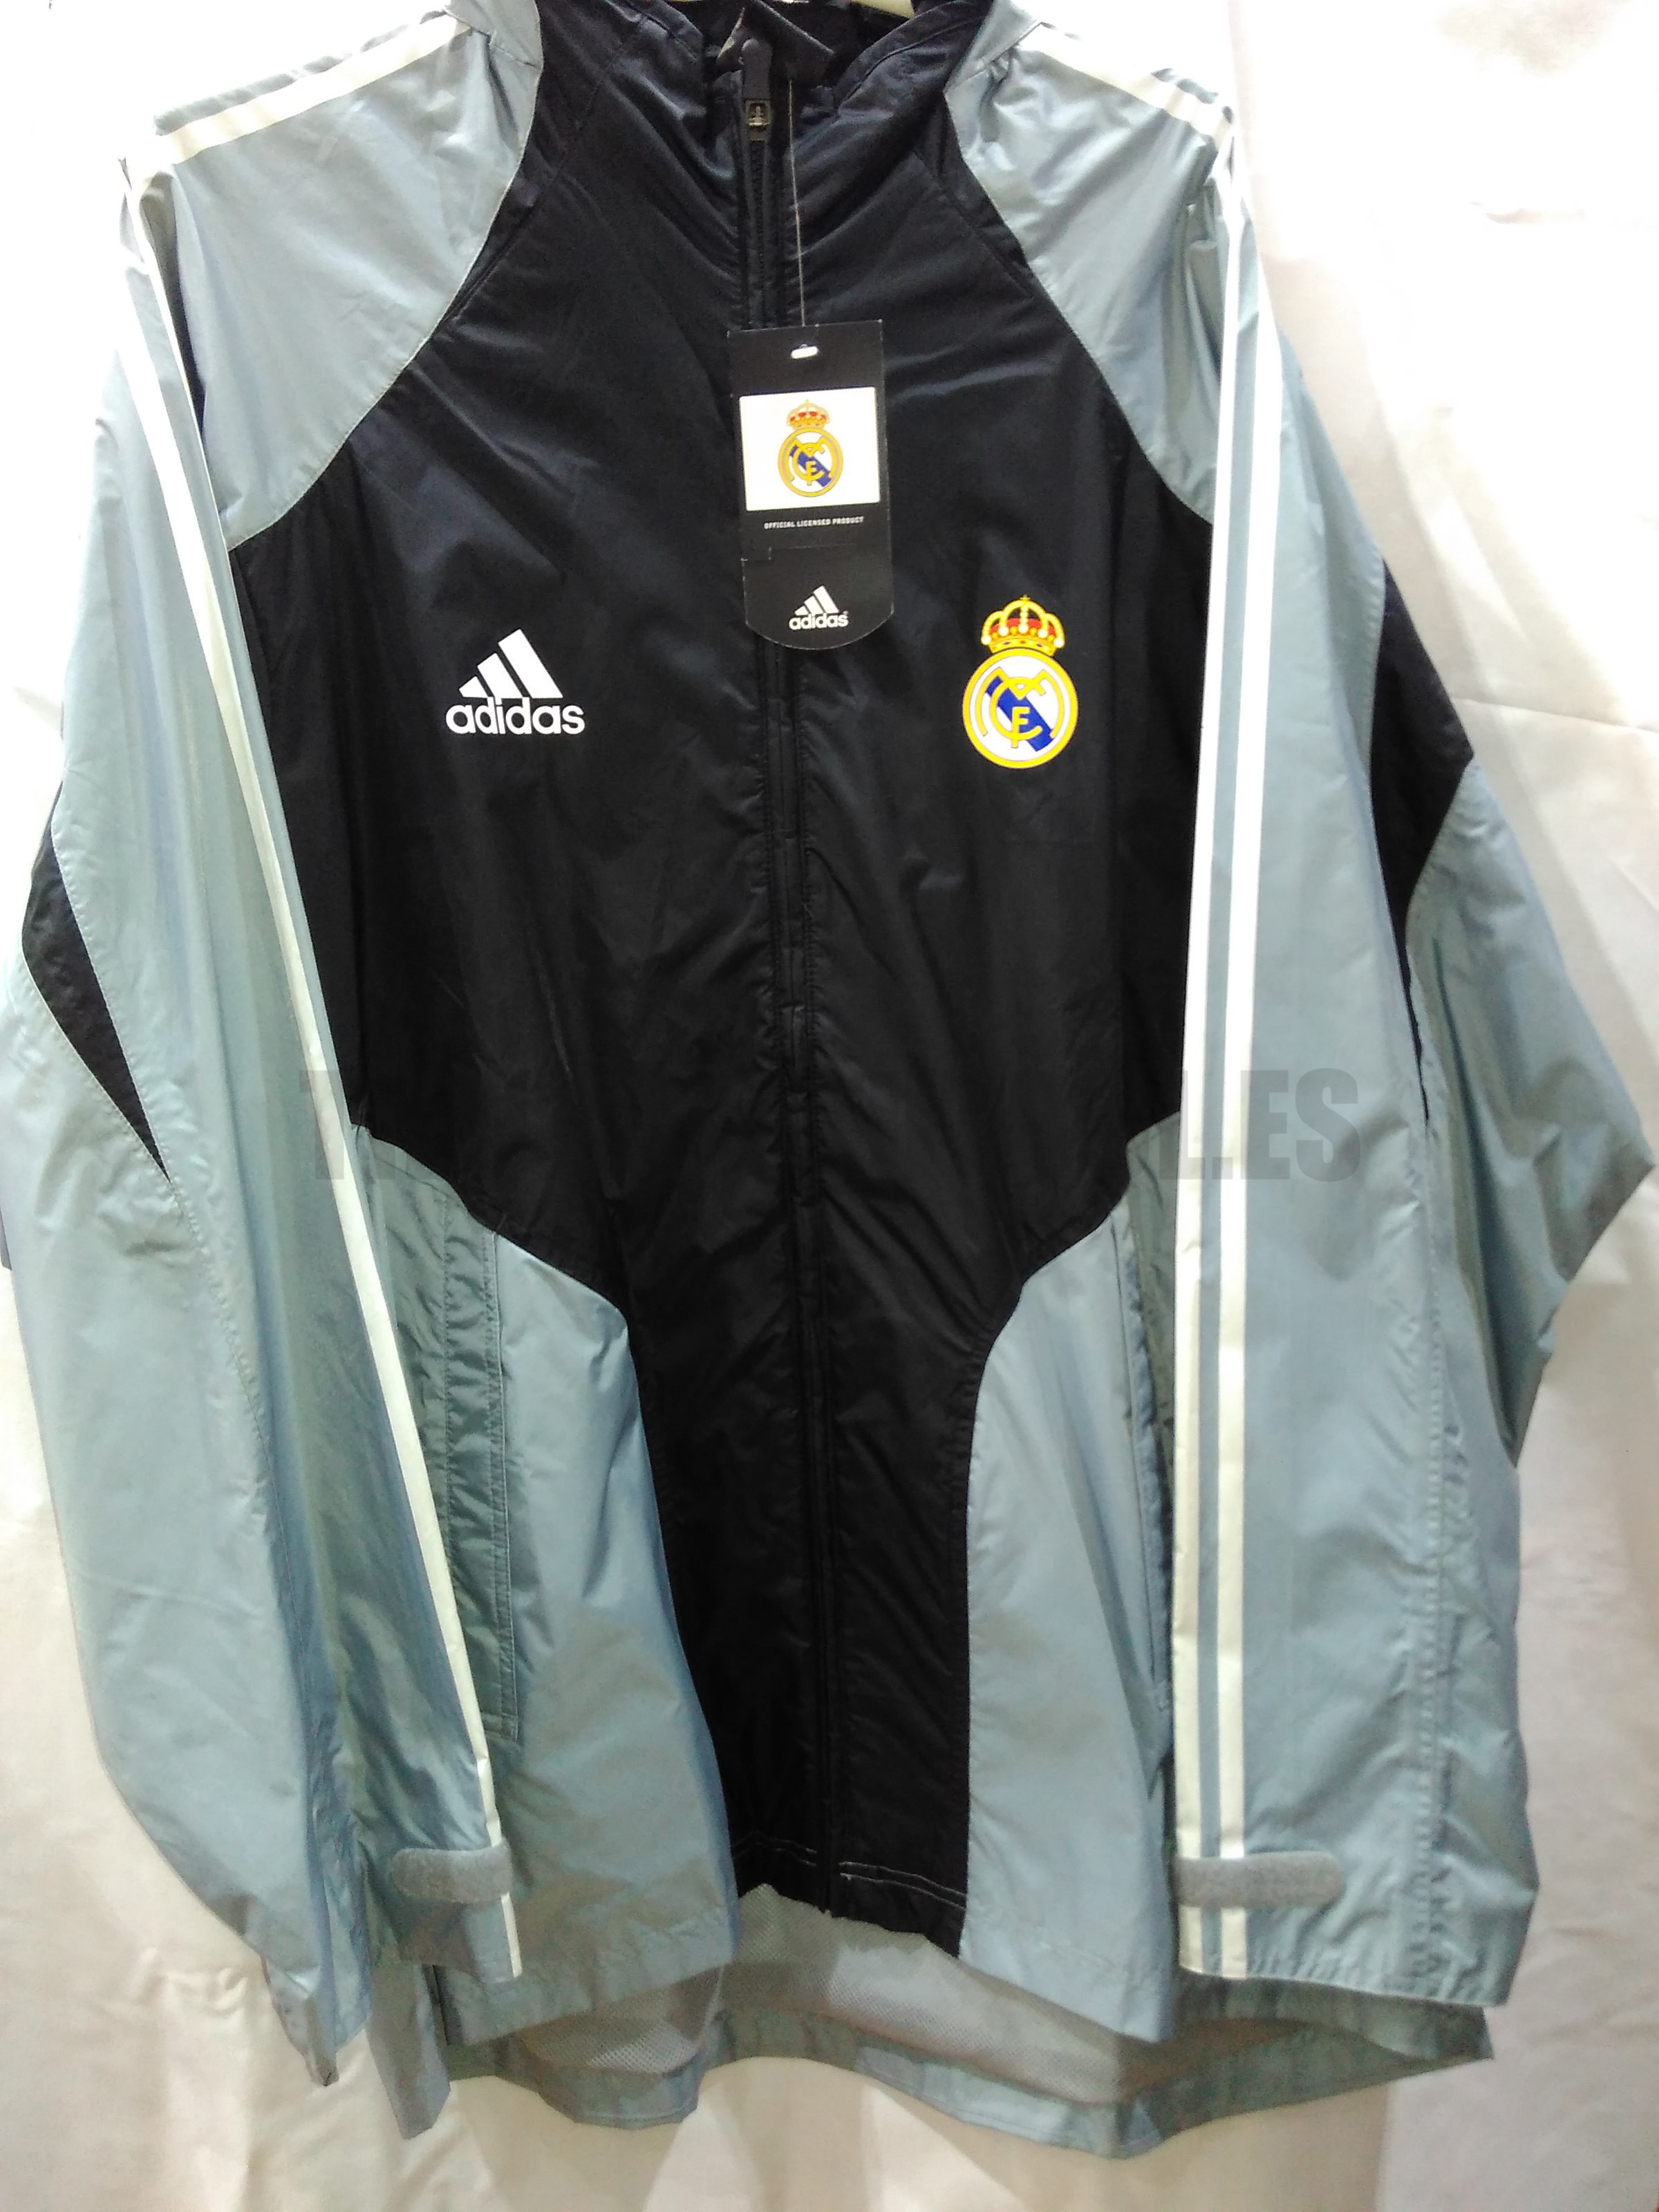 Real Chubasquero GRIS | Oficial Chubasquero Real Madrid Adidas chubasquero